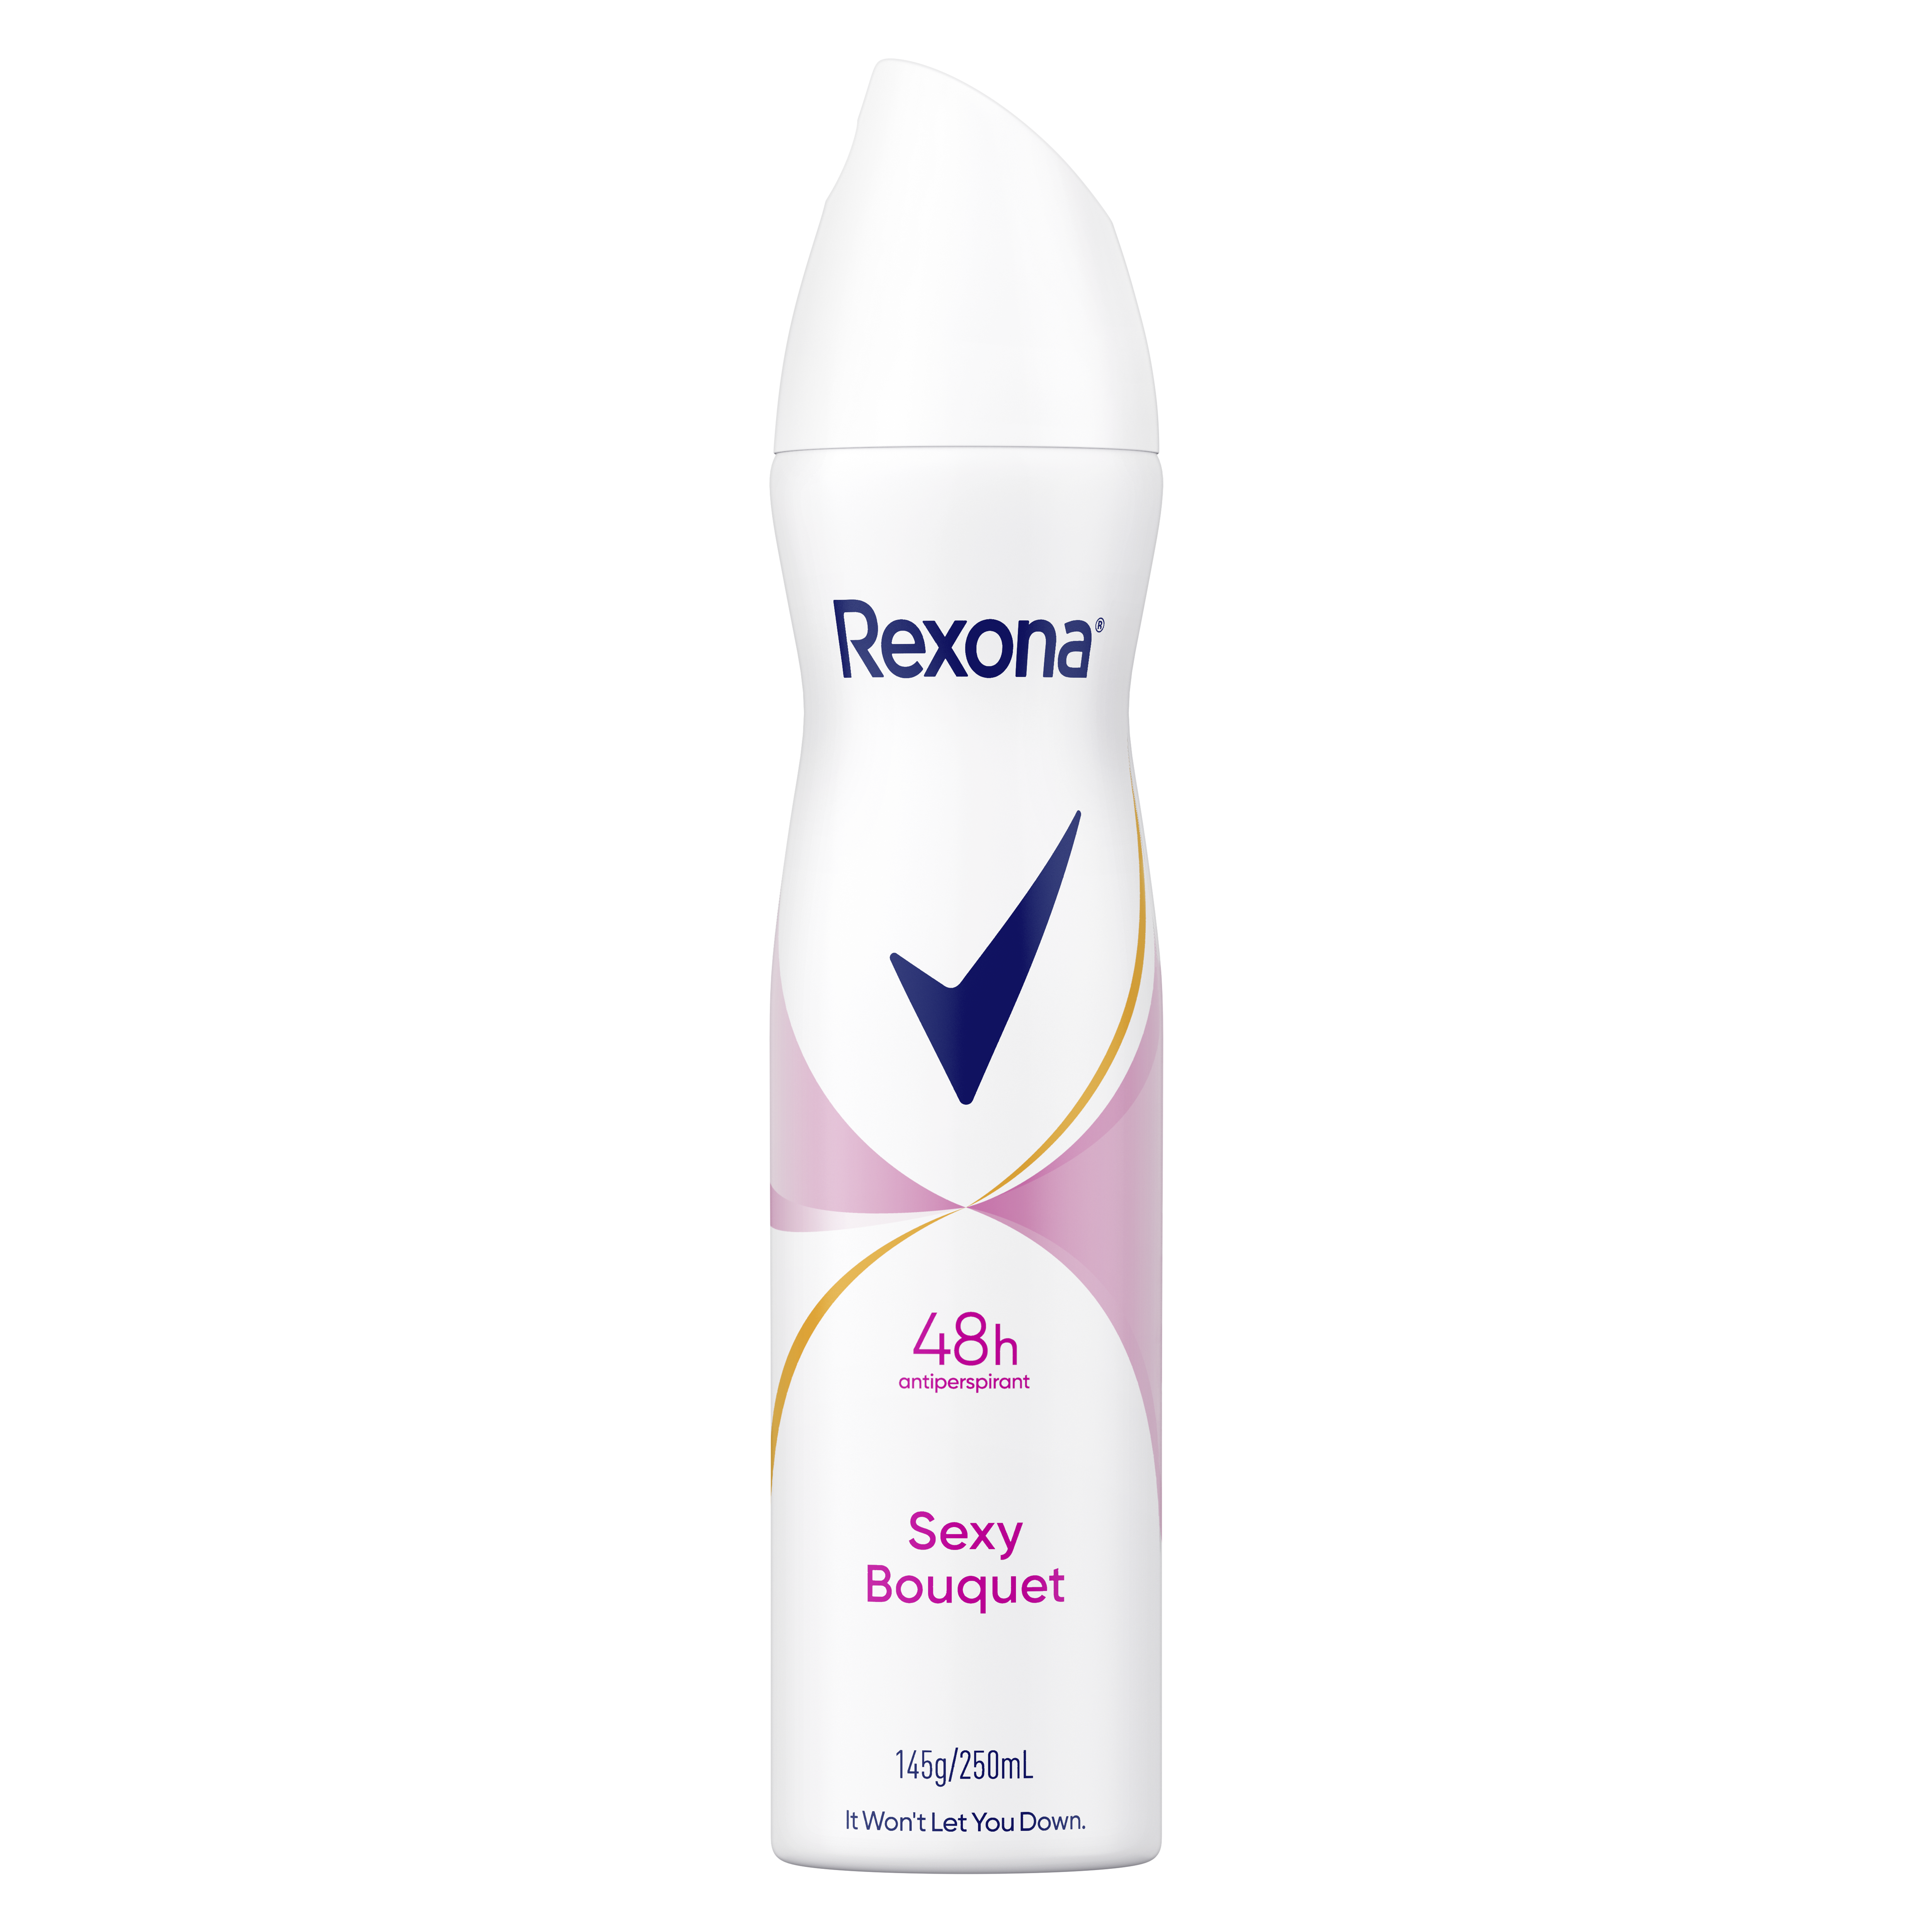 Rexona Sexy desodorante 90g aerosol lata Bouquet Mujer 72 horas.